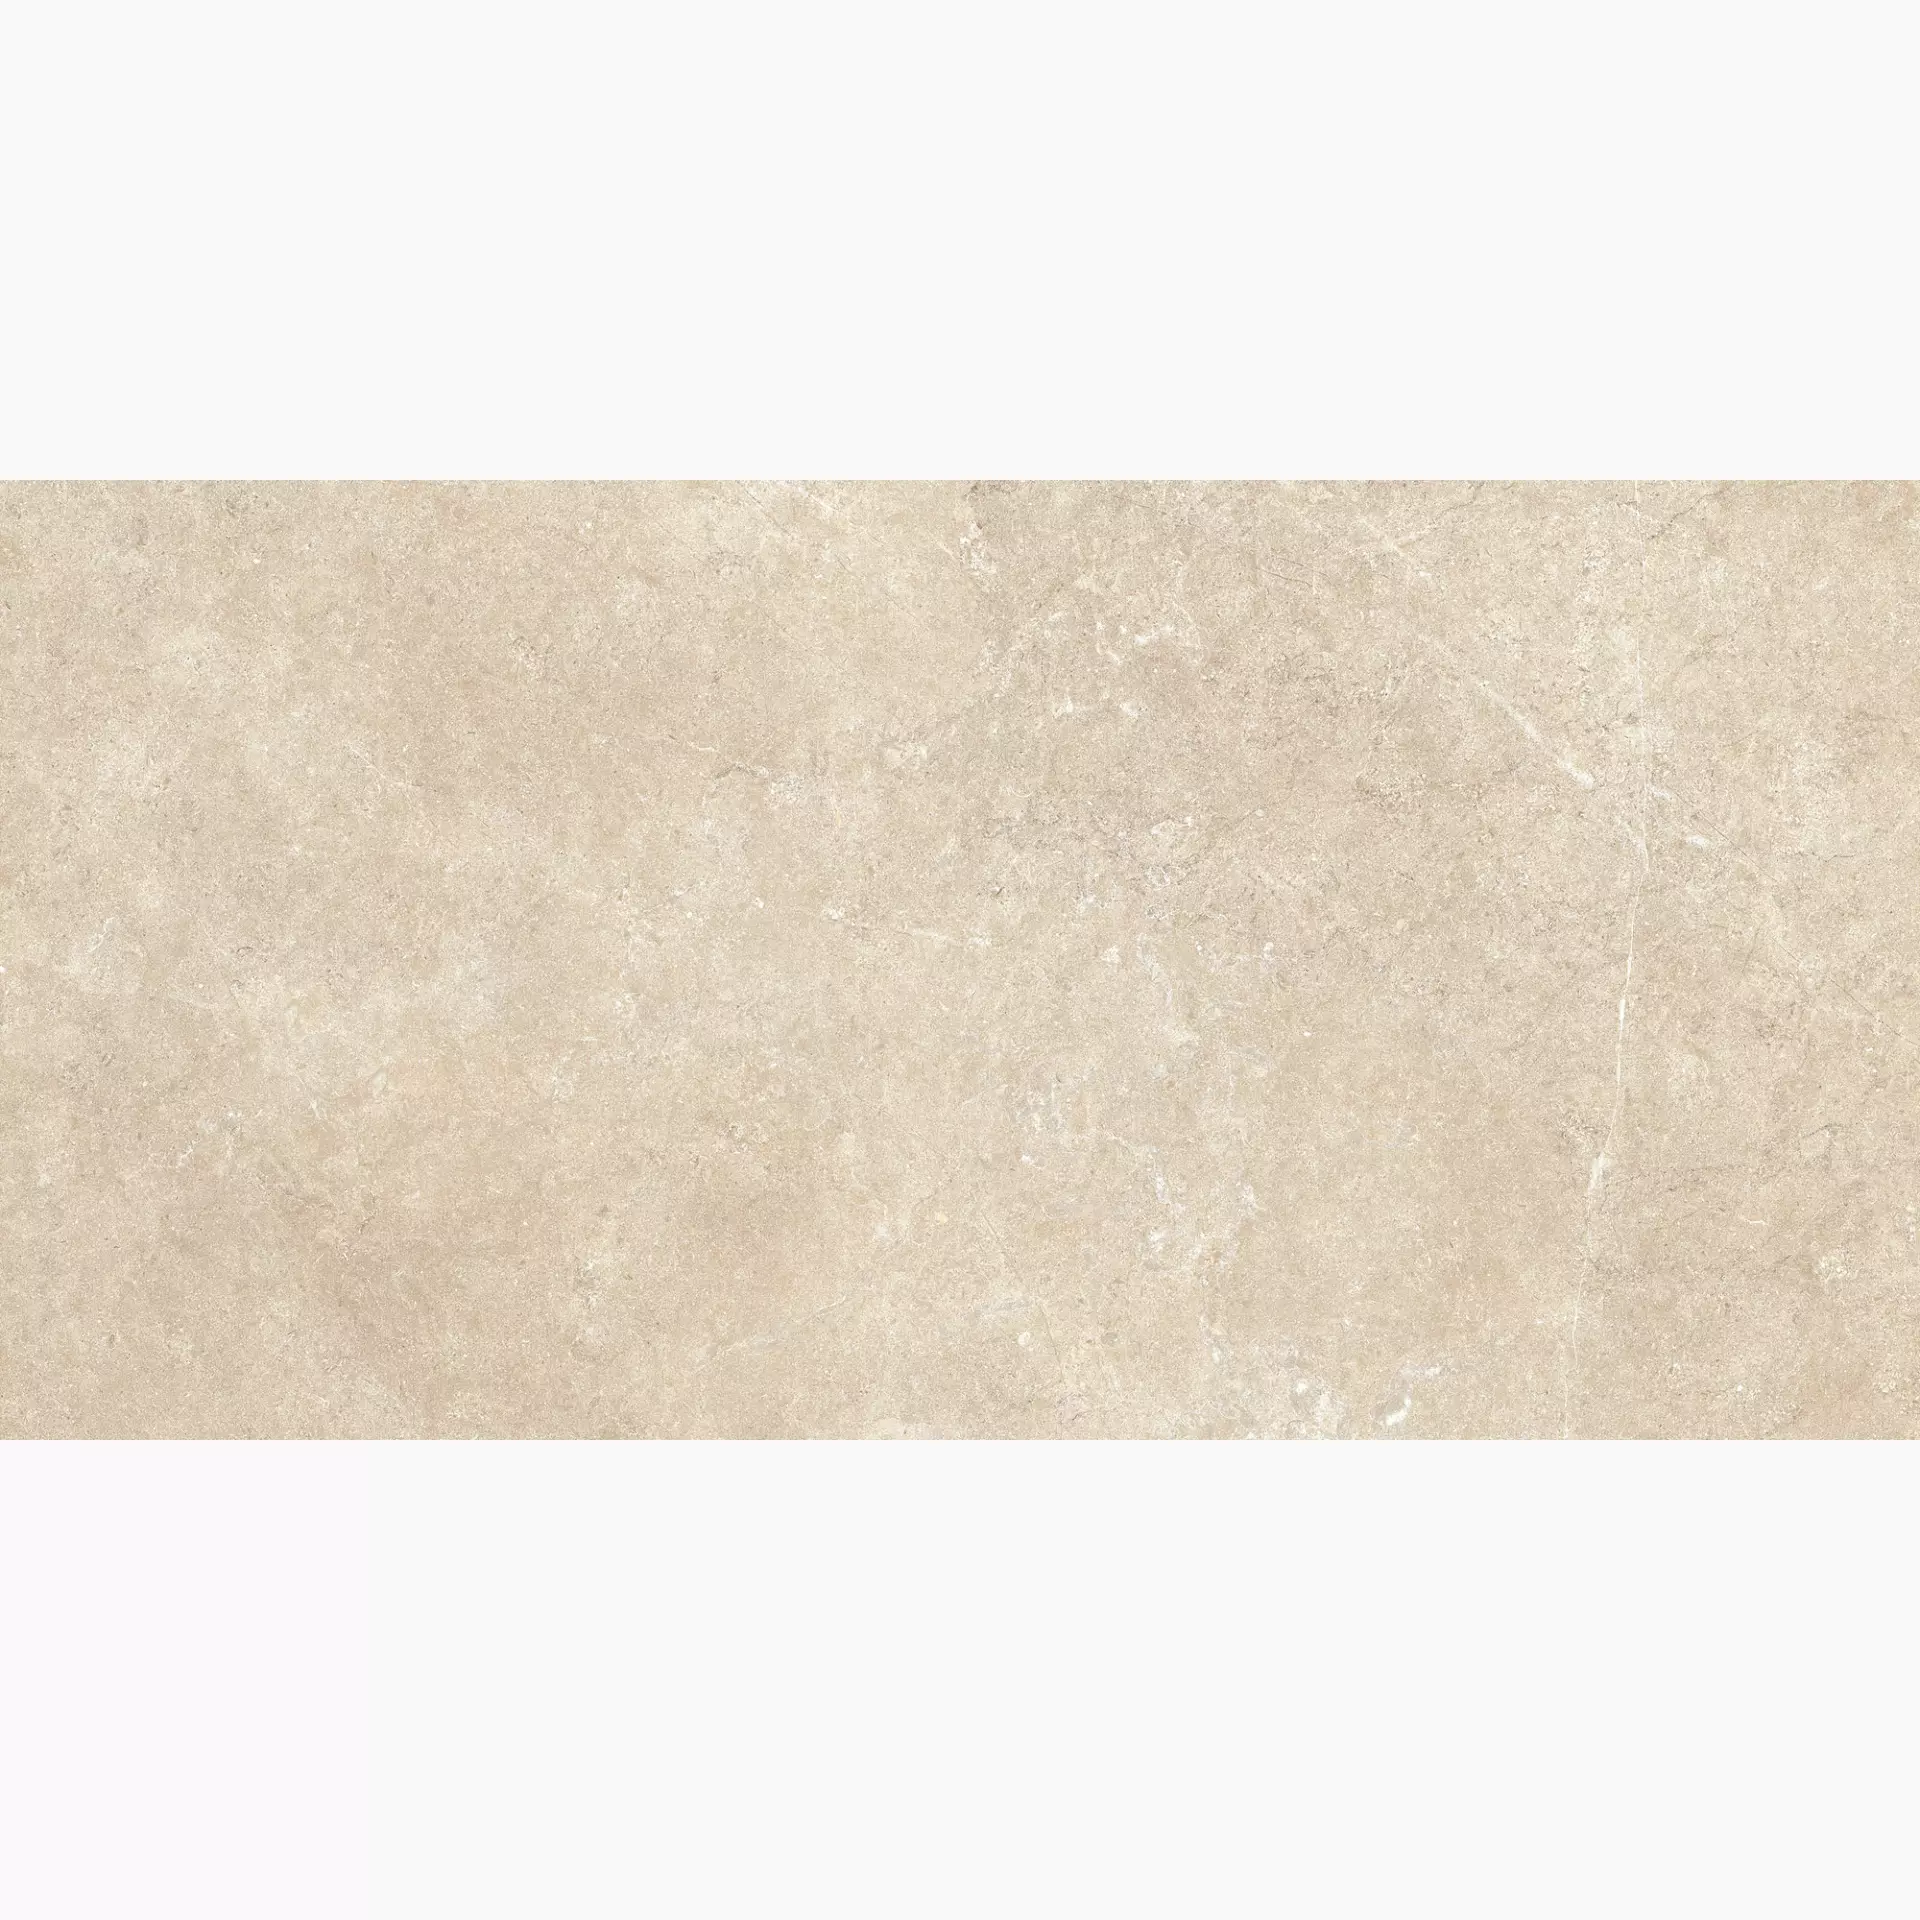 Ragno Realstone Argent Sabbia Naturale – Ptv R9KL naturale – ptv 60x120cm 9,5mm